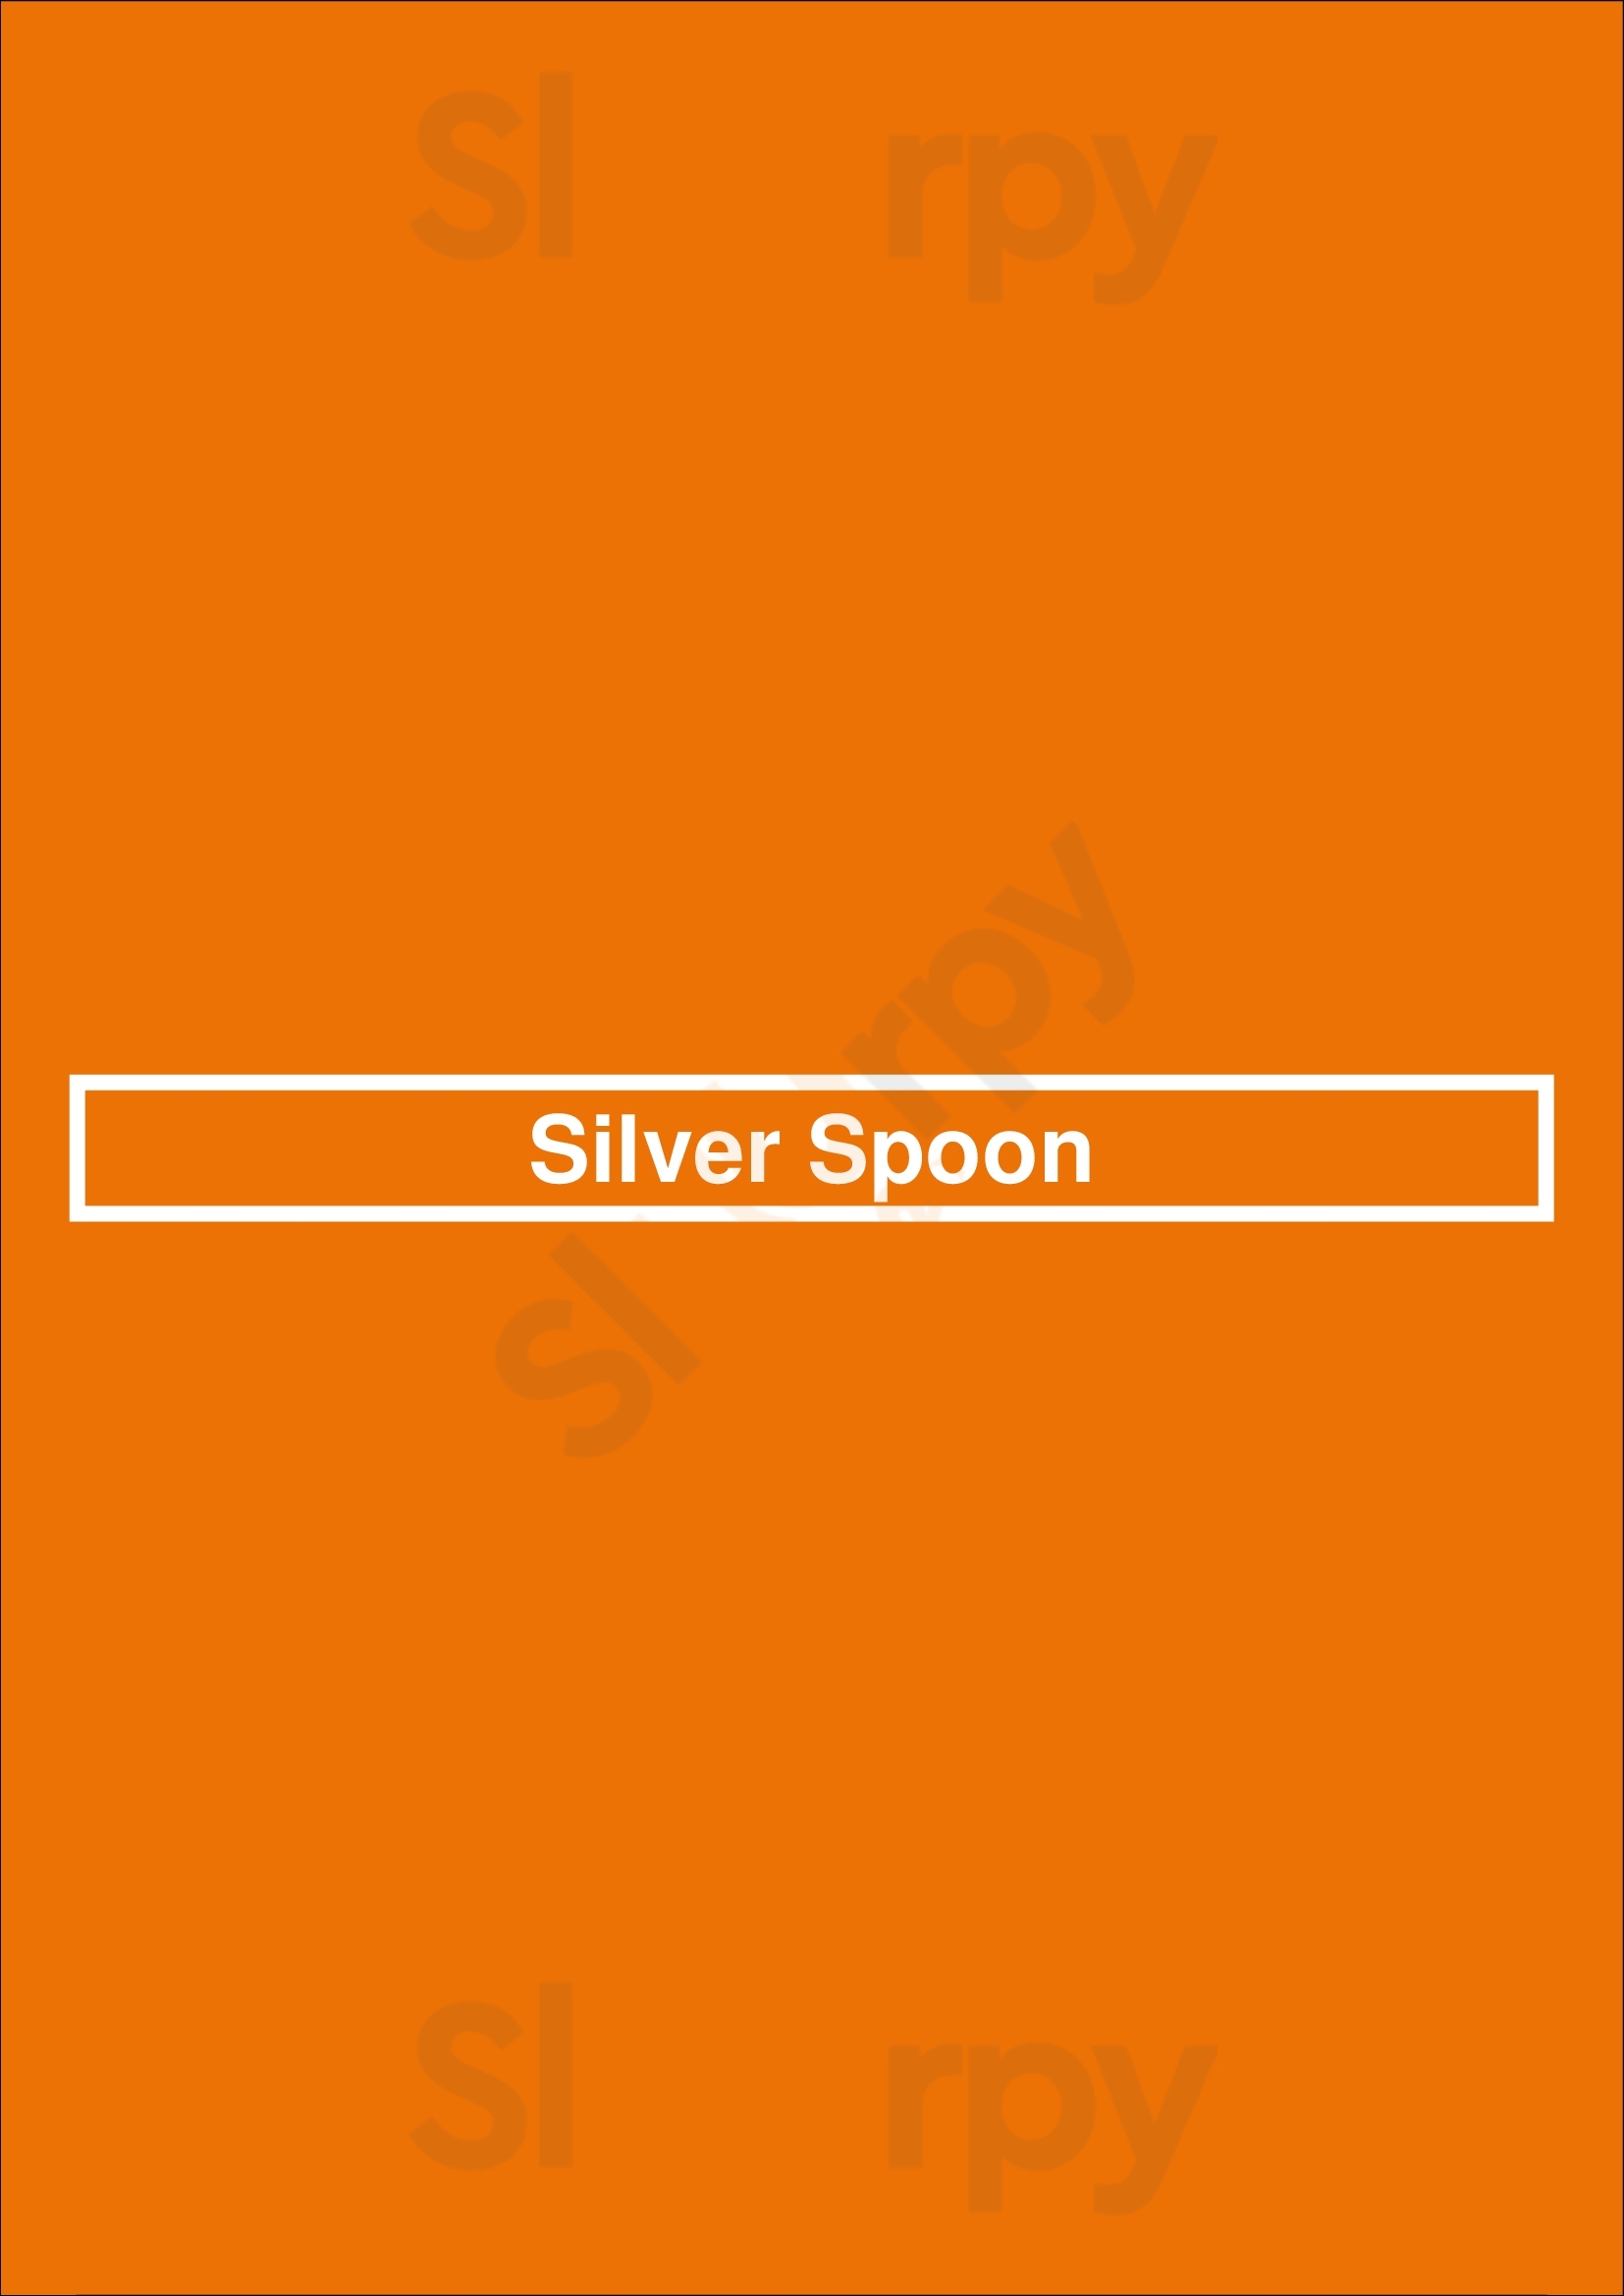 Silver Spoon Milton Menu - 1